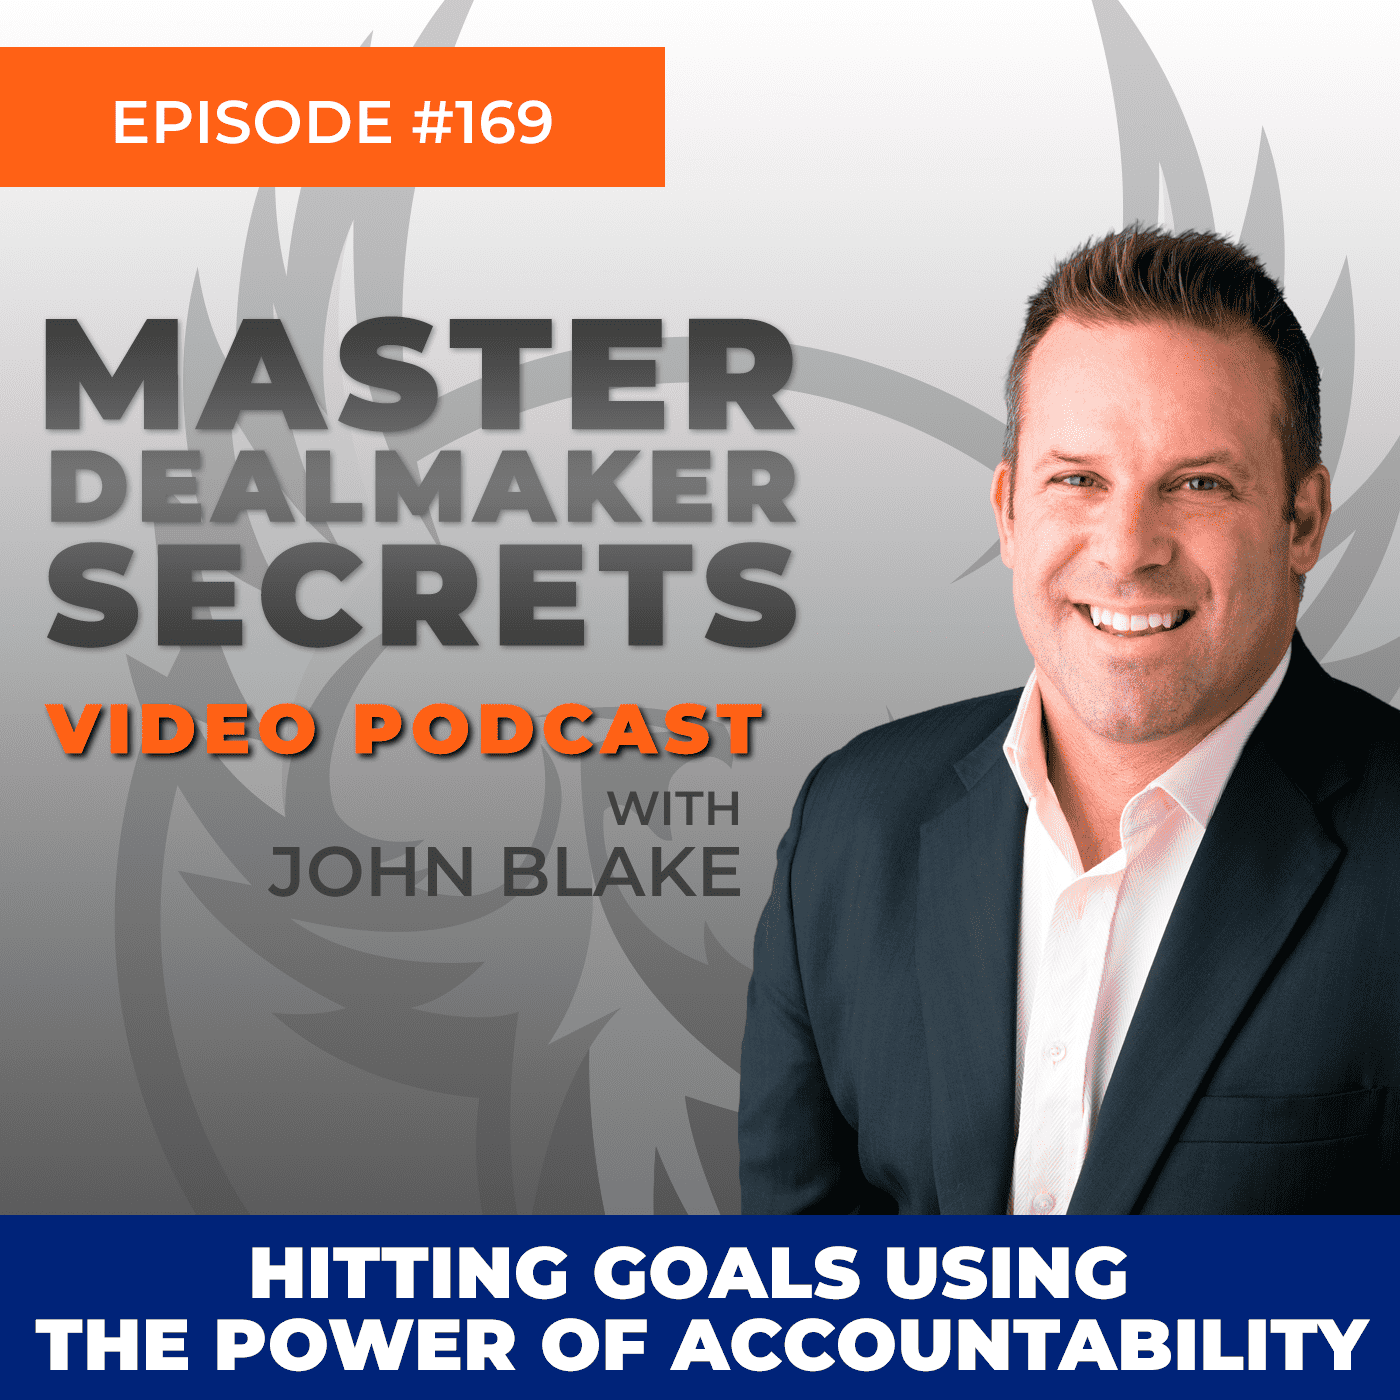 John Blake Hitting Goals Using the Power of Accountability